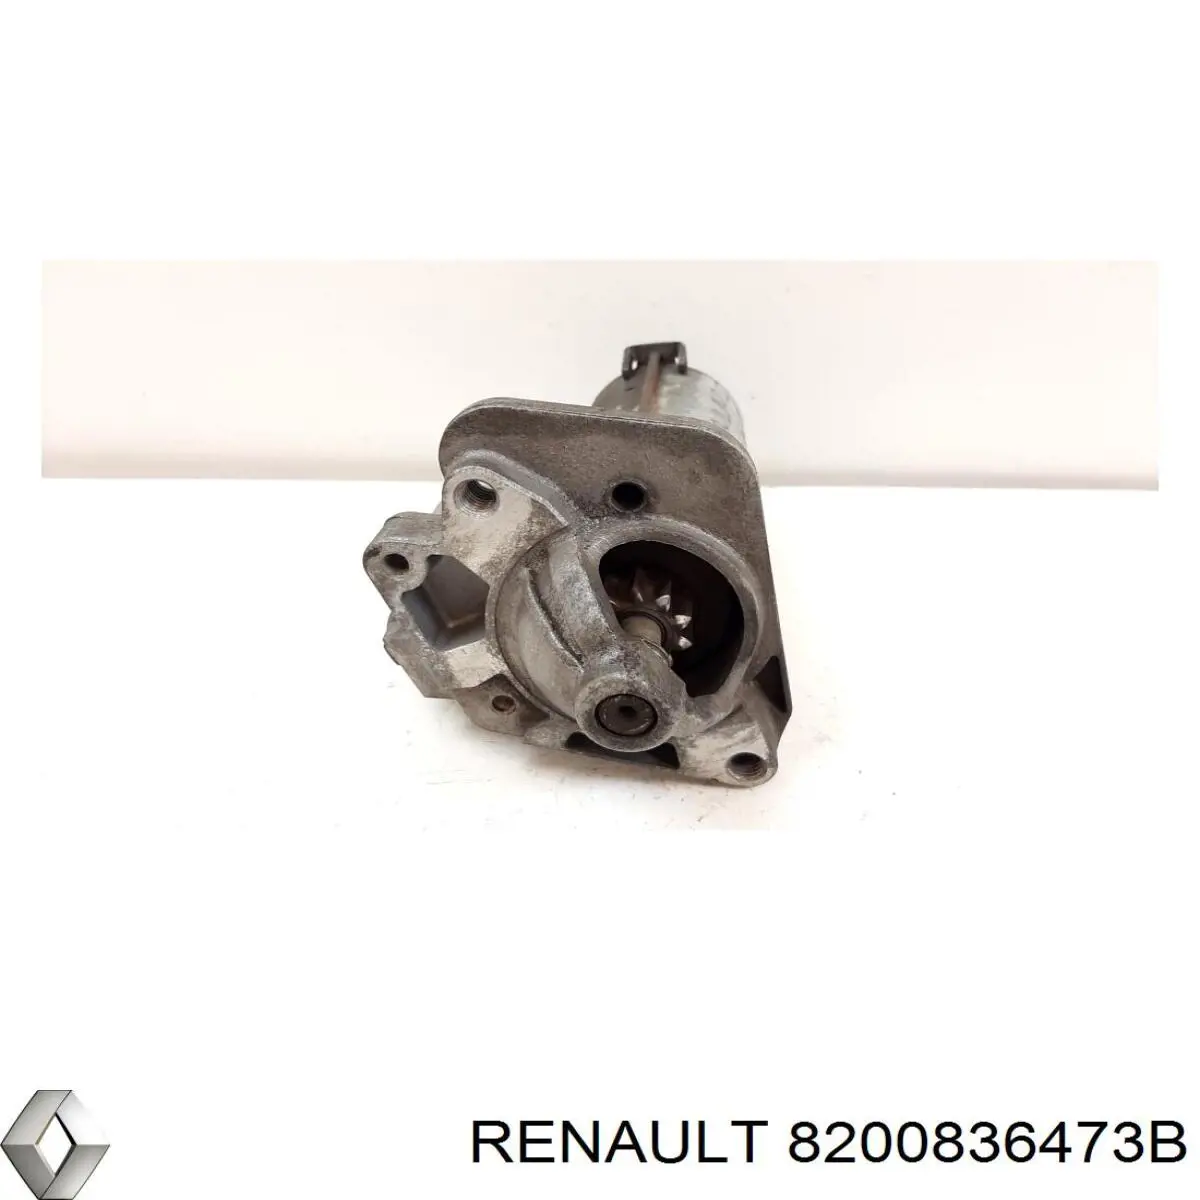 8200836473B Renault (RVI) motor de arranque